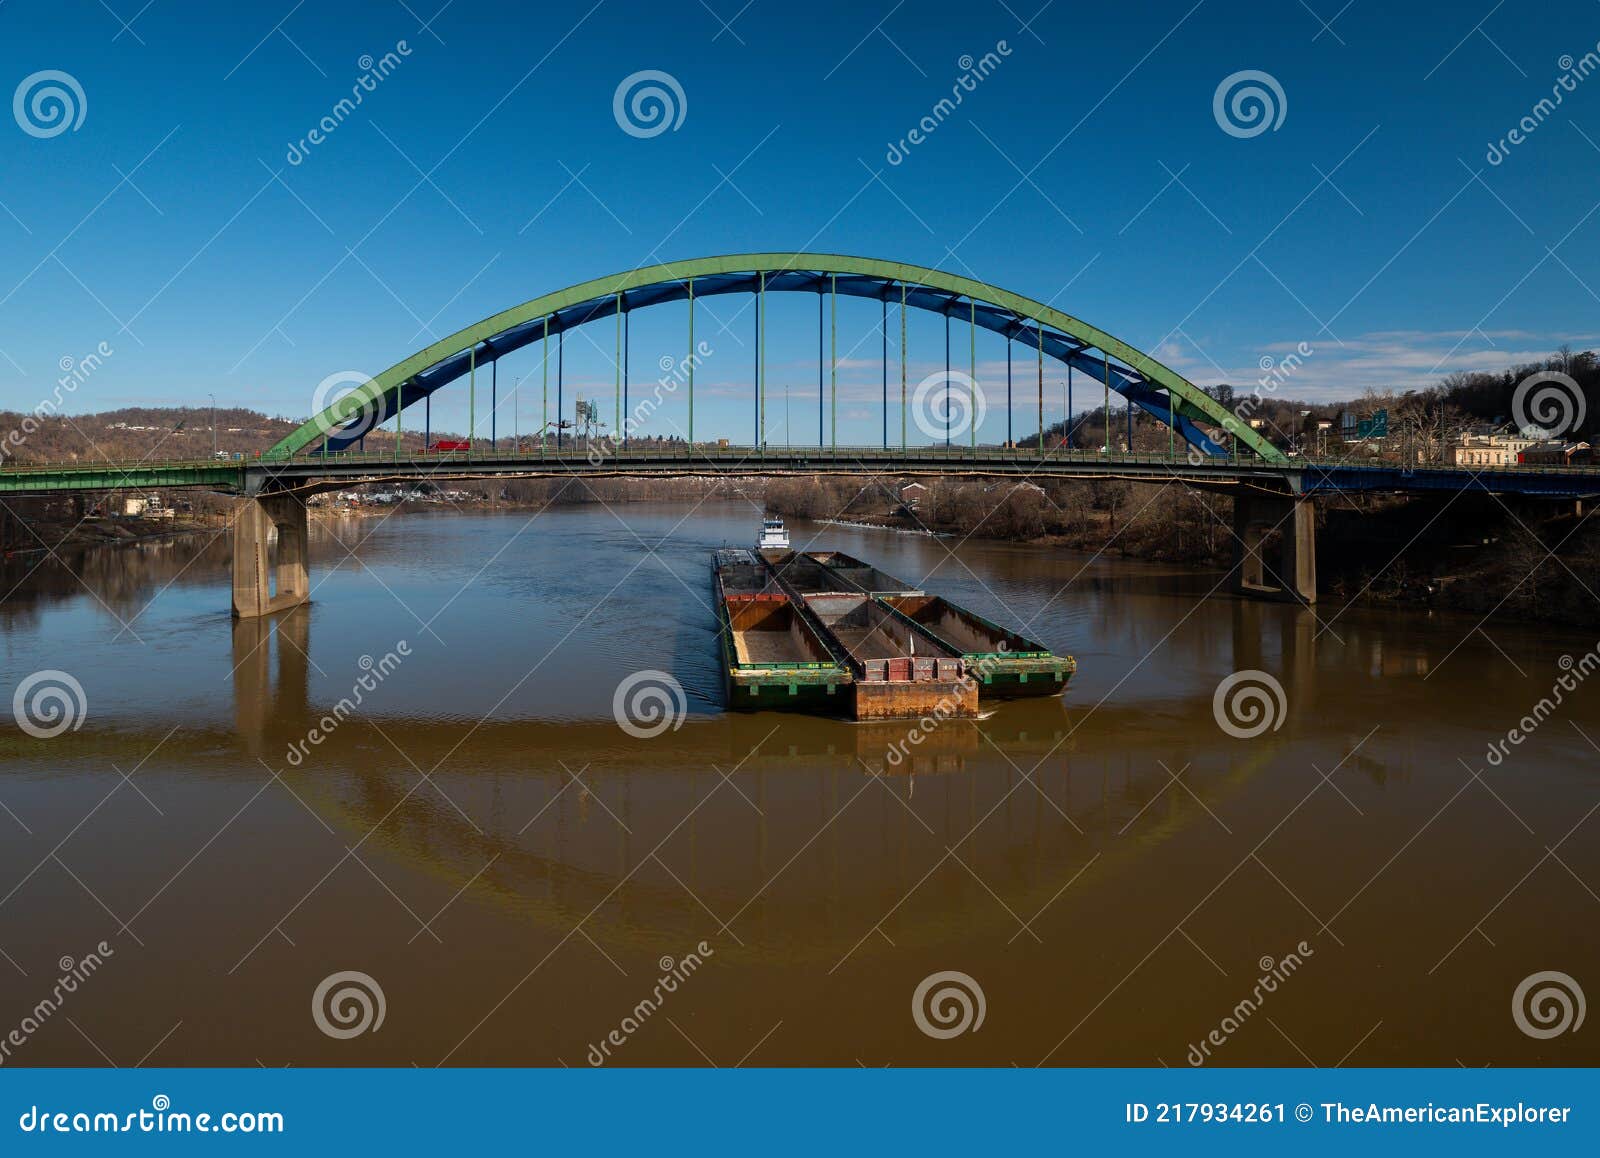 fort henry arch bridge - interstate 70, us routes 40 & 250 - ohio river - wheeling, west virginia